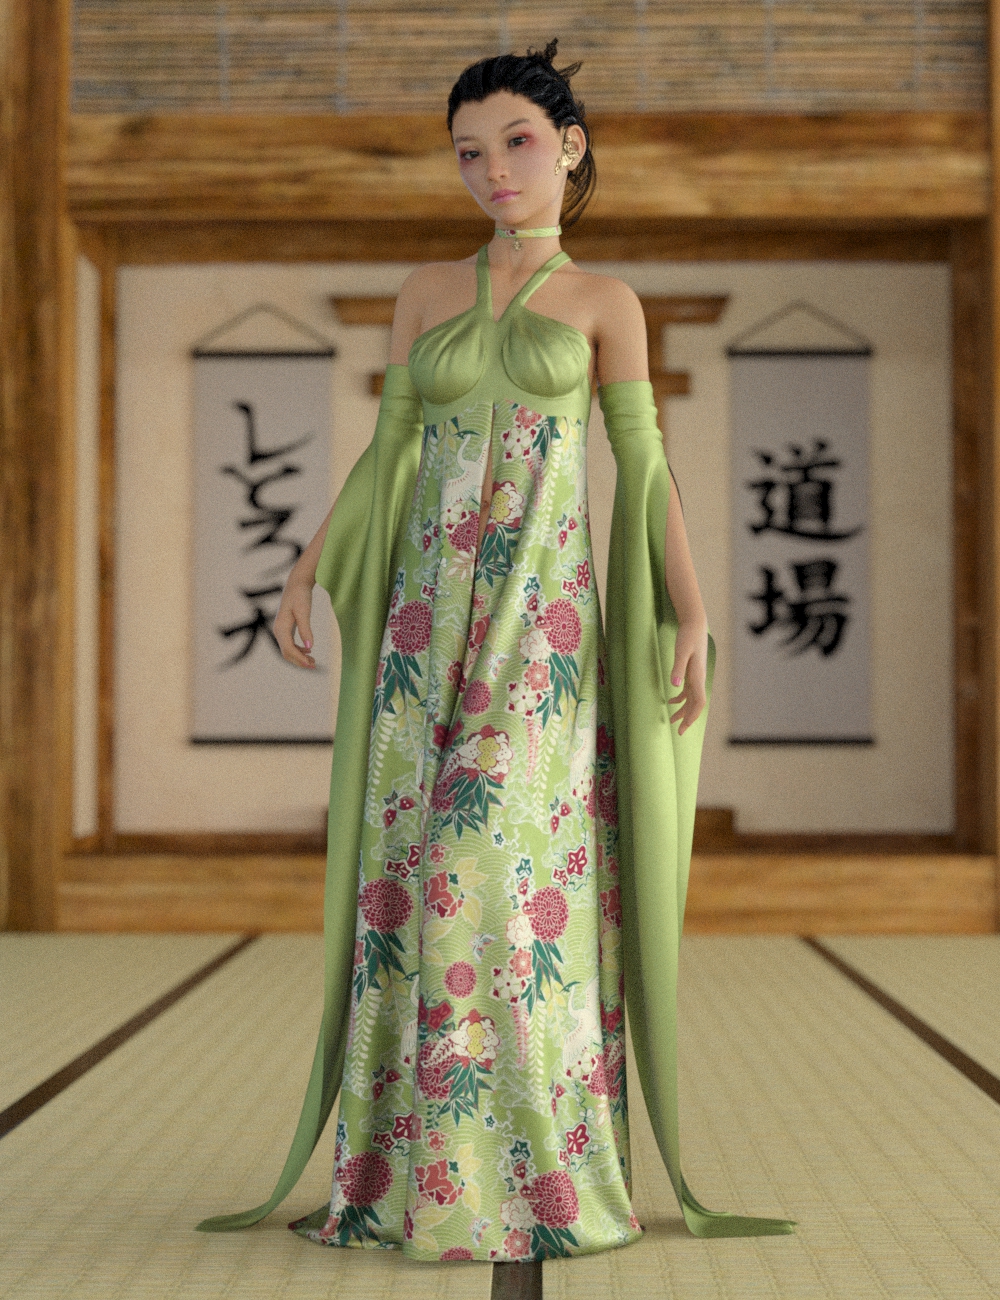 dForce Mahaut Fantasy Outfit Textures by: Moonscape GraphicsSade, 3D Models by Daz 3D